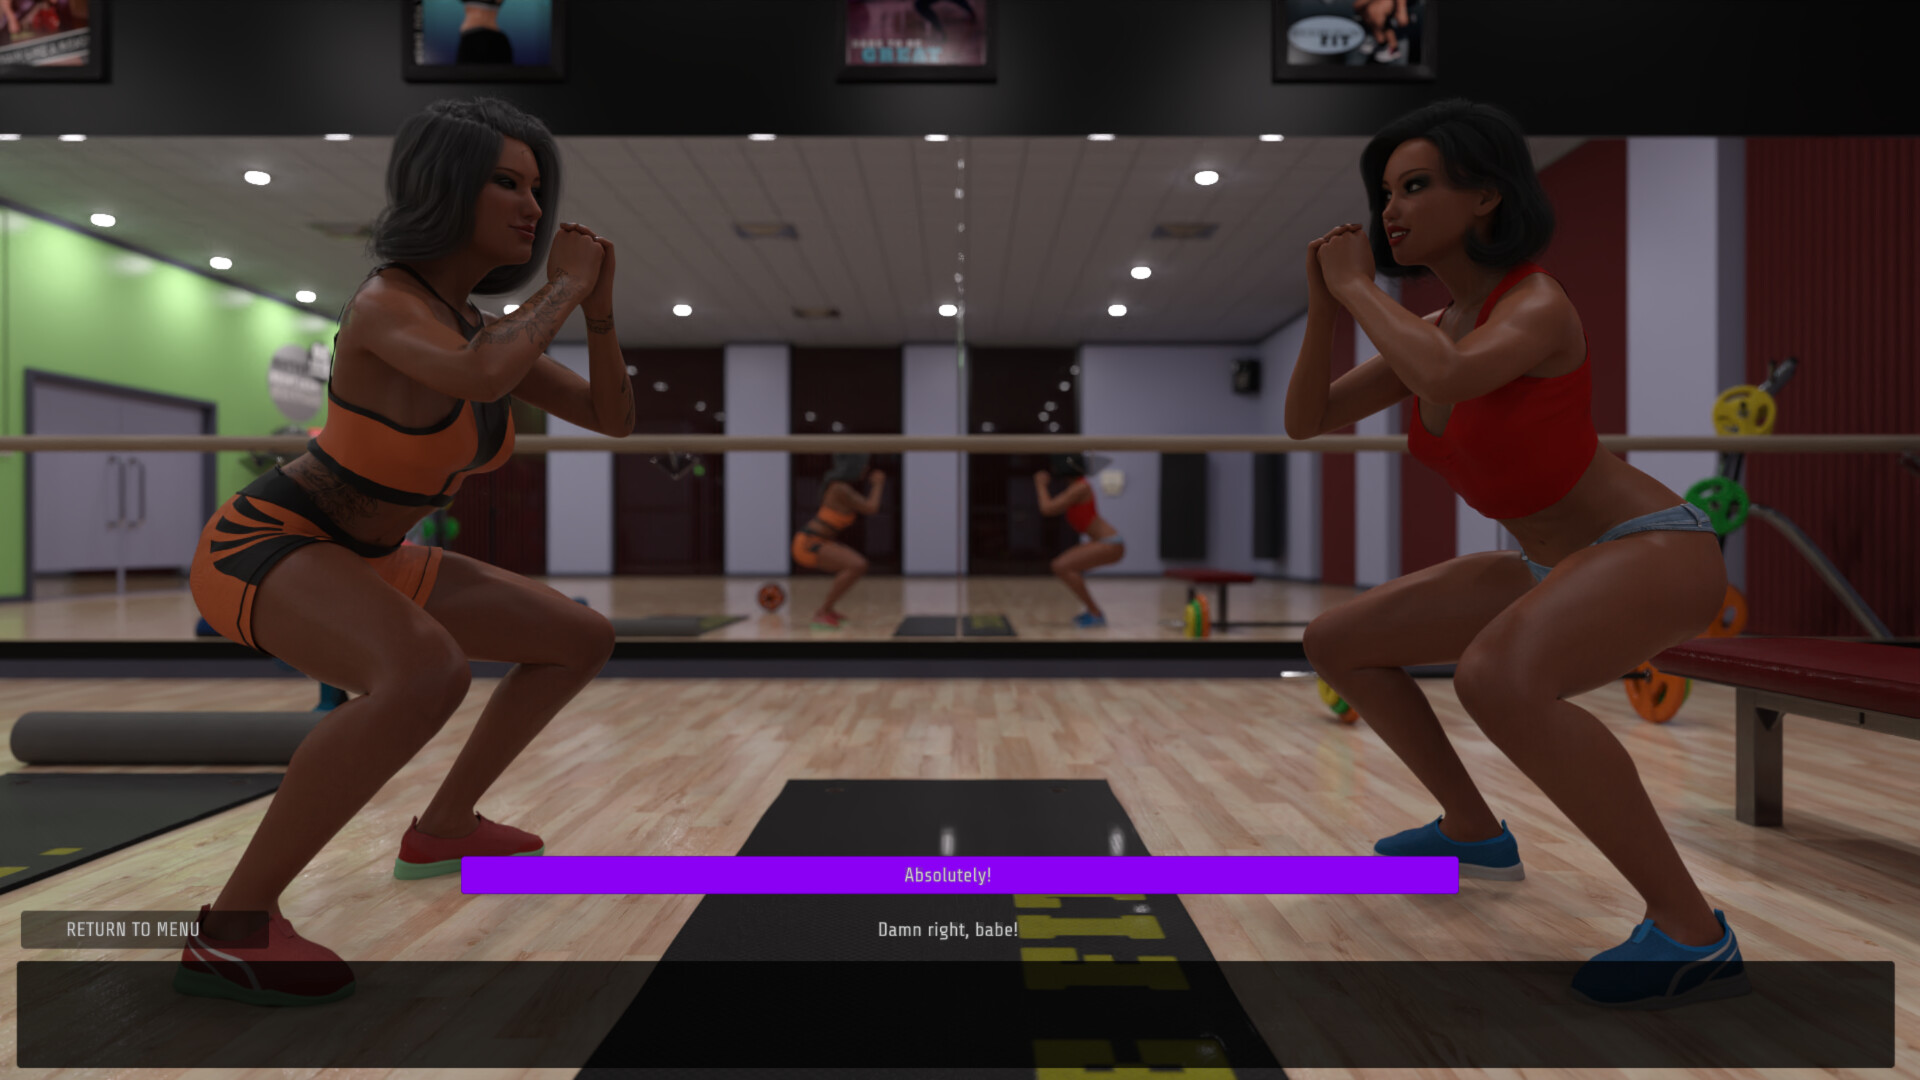 [$ 1.1] Sex Simulator - Gym Girls Steam CD Key